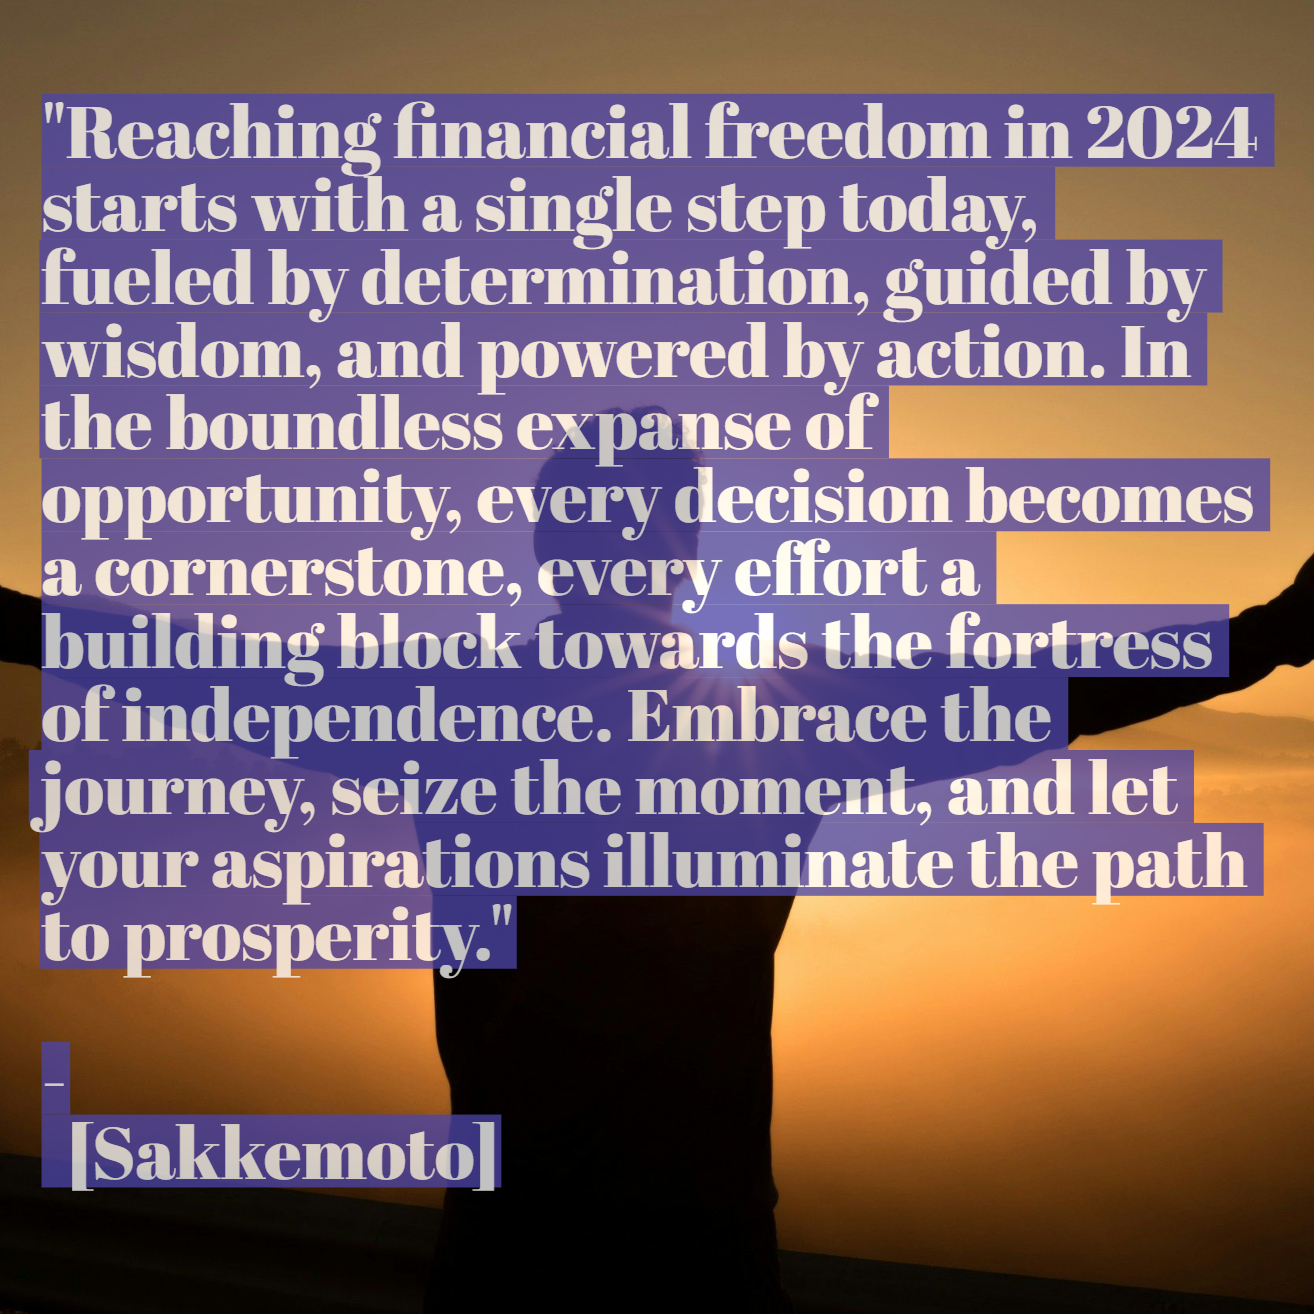 Reaching financial freedom in 2024